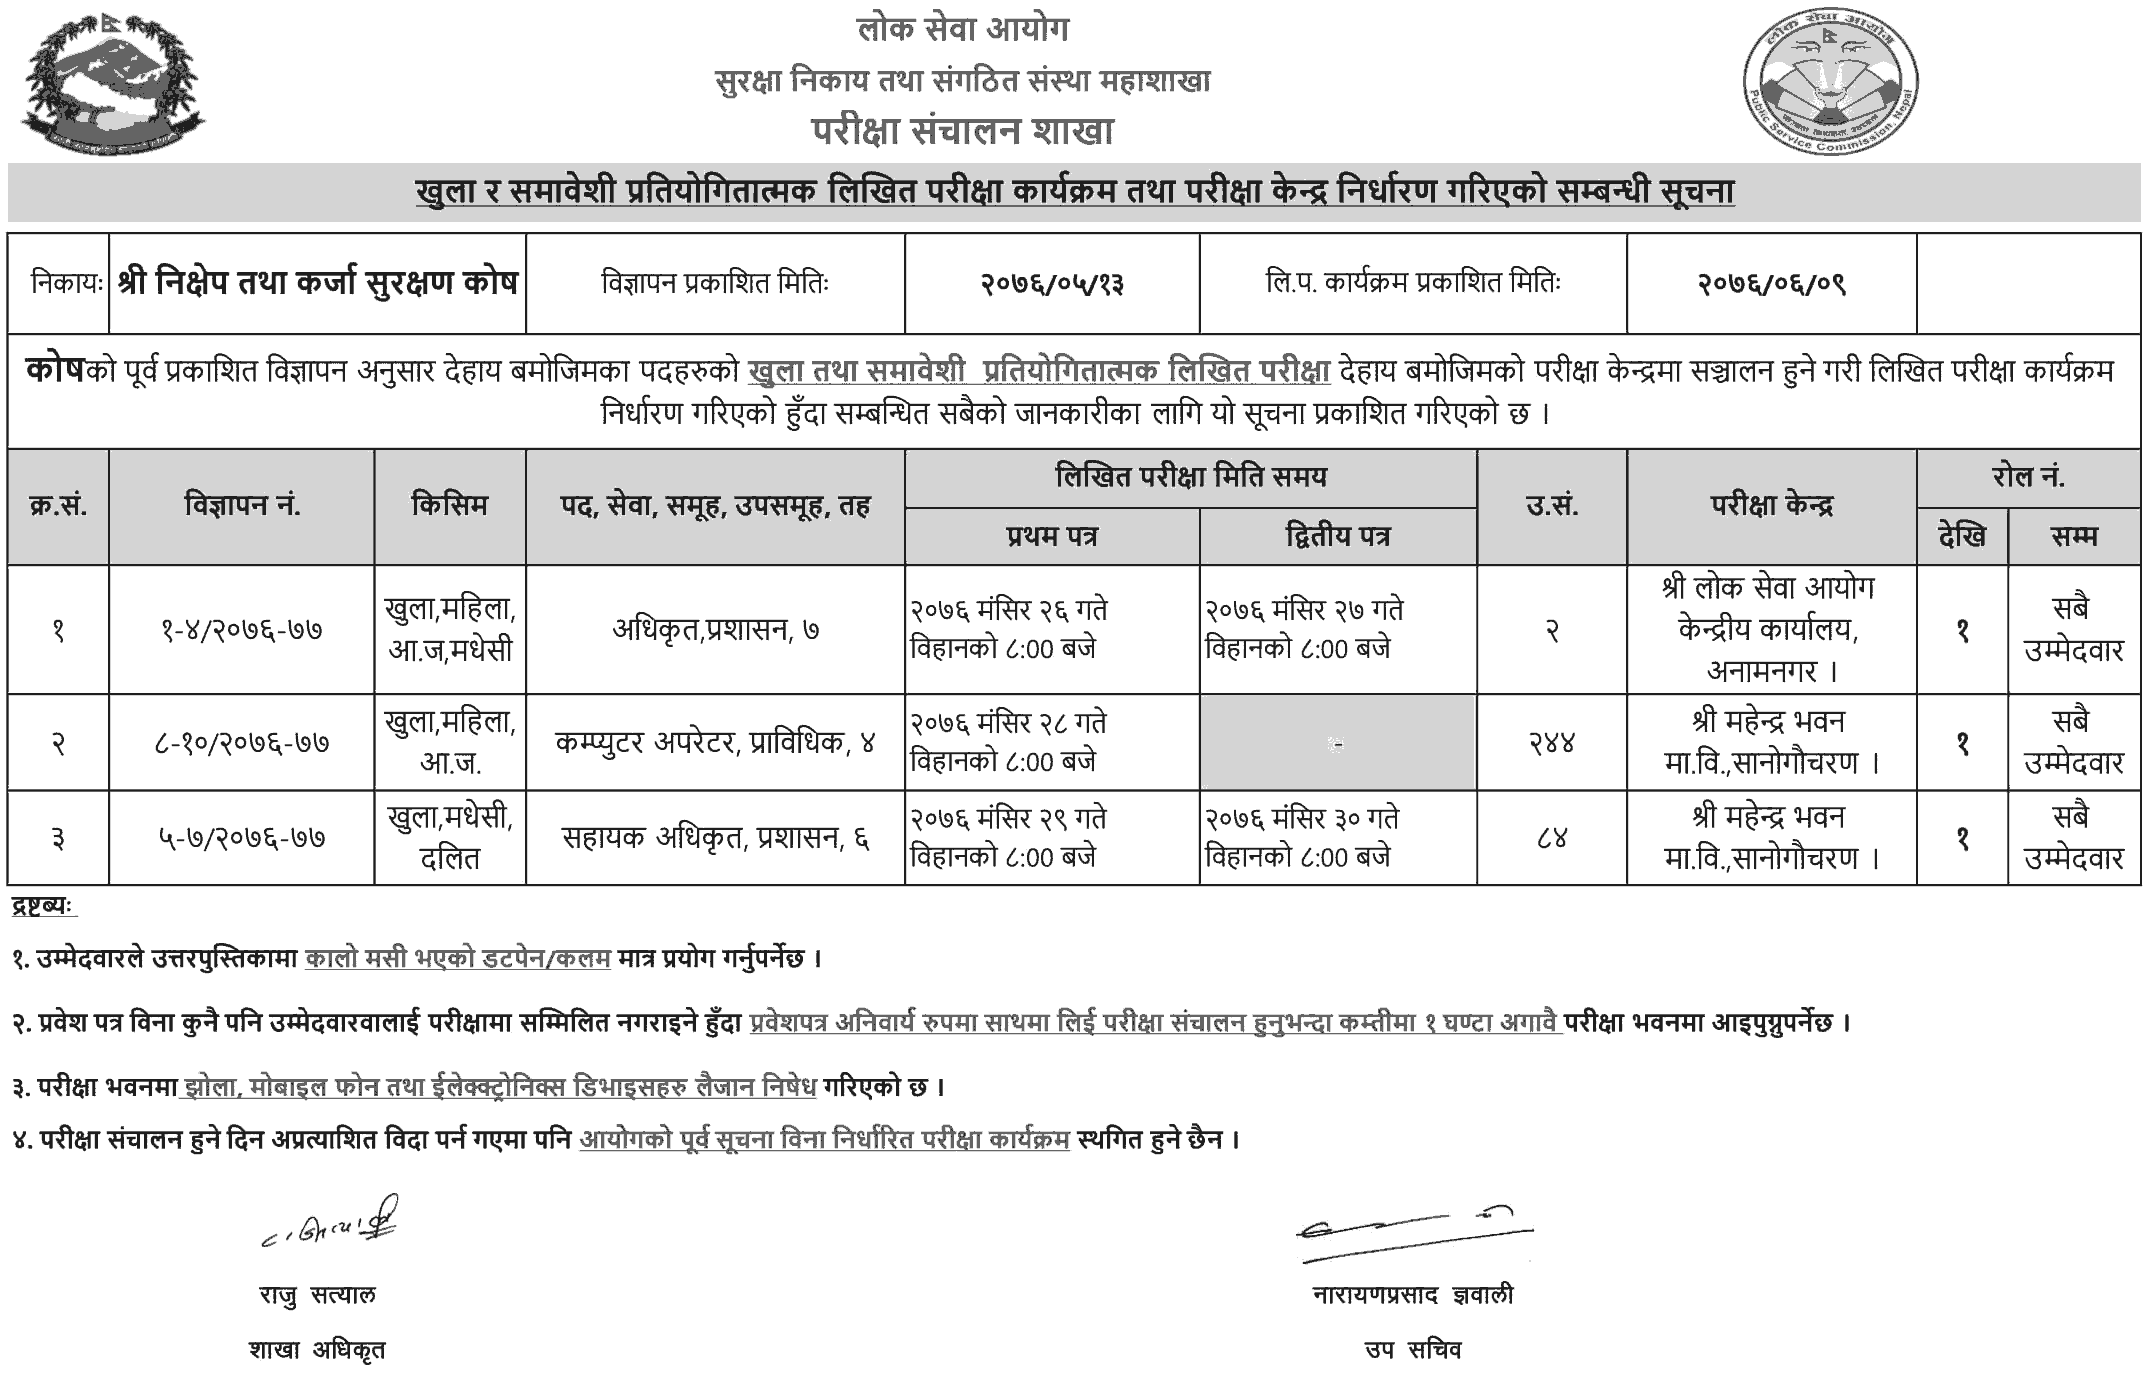 Nikshep Tatha Karja Surakshan Kosh Written Exam Schedule and Exam Center